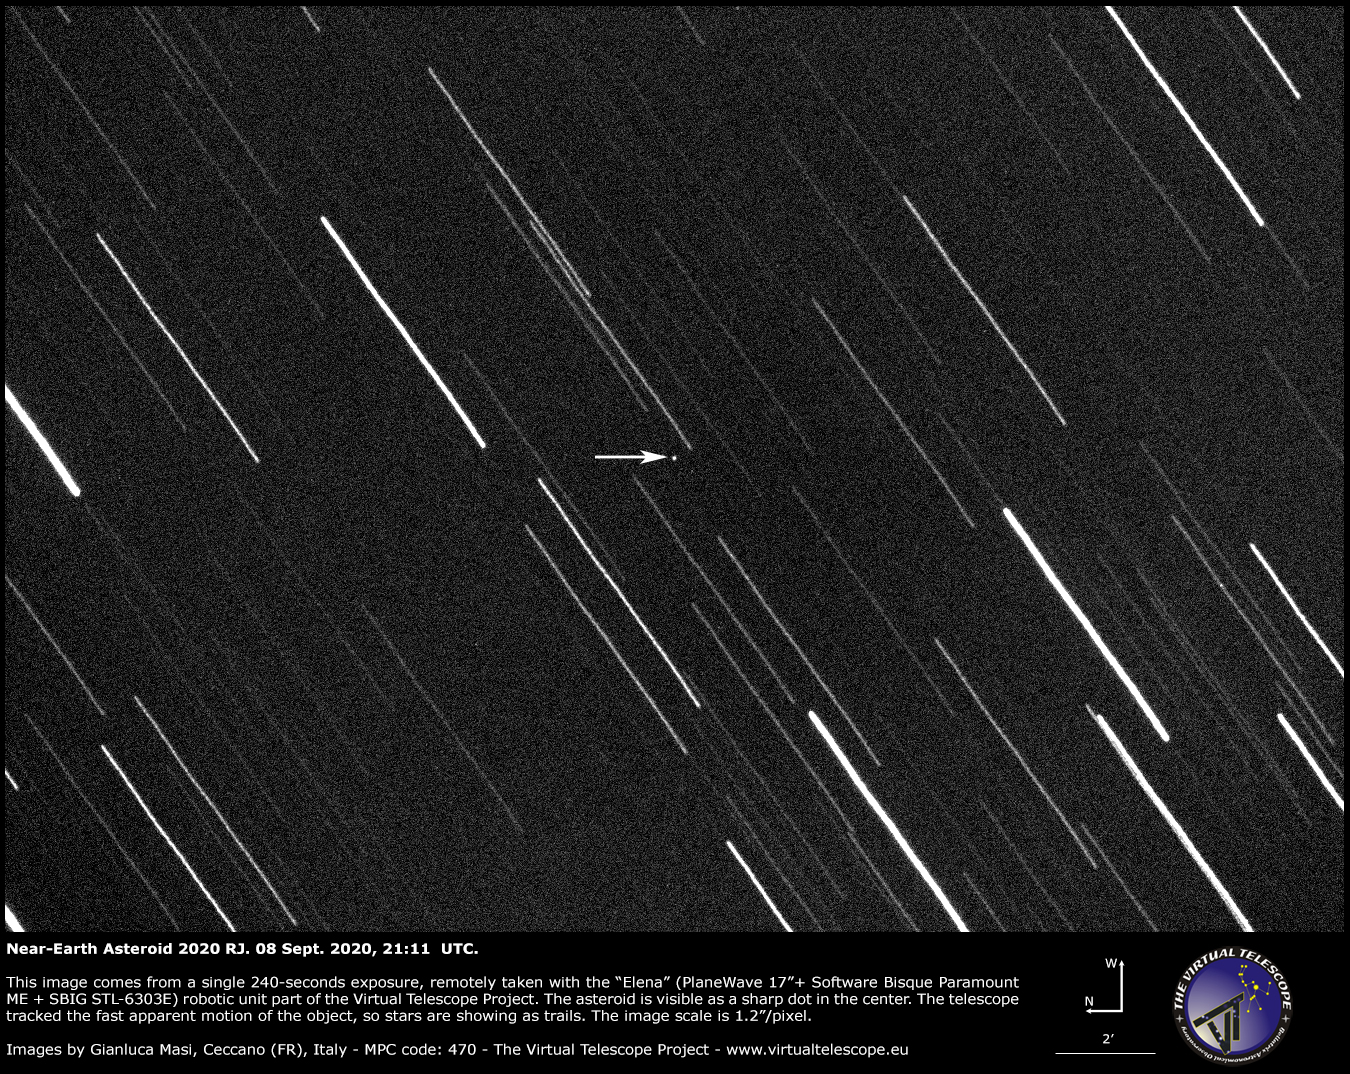 Near-Earth Asteroid 2020 RJ. 8 Sept. 2020.